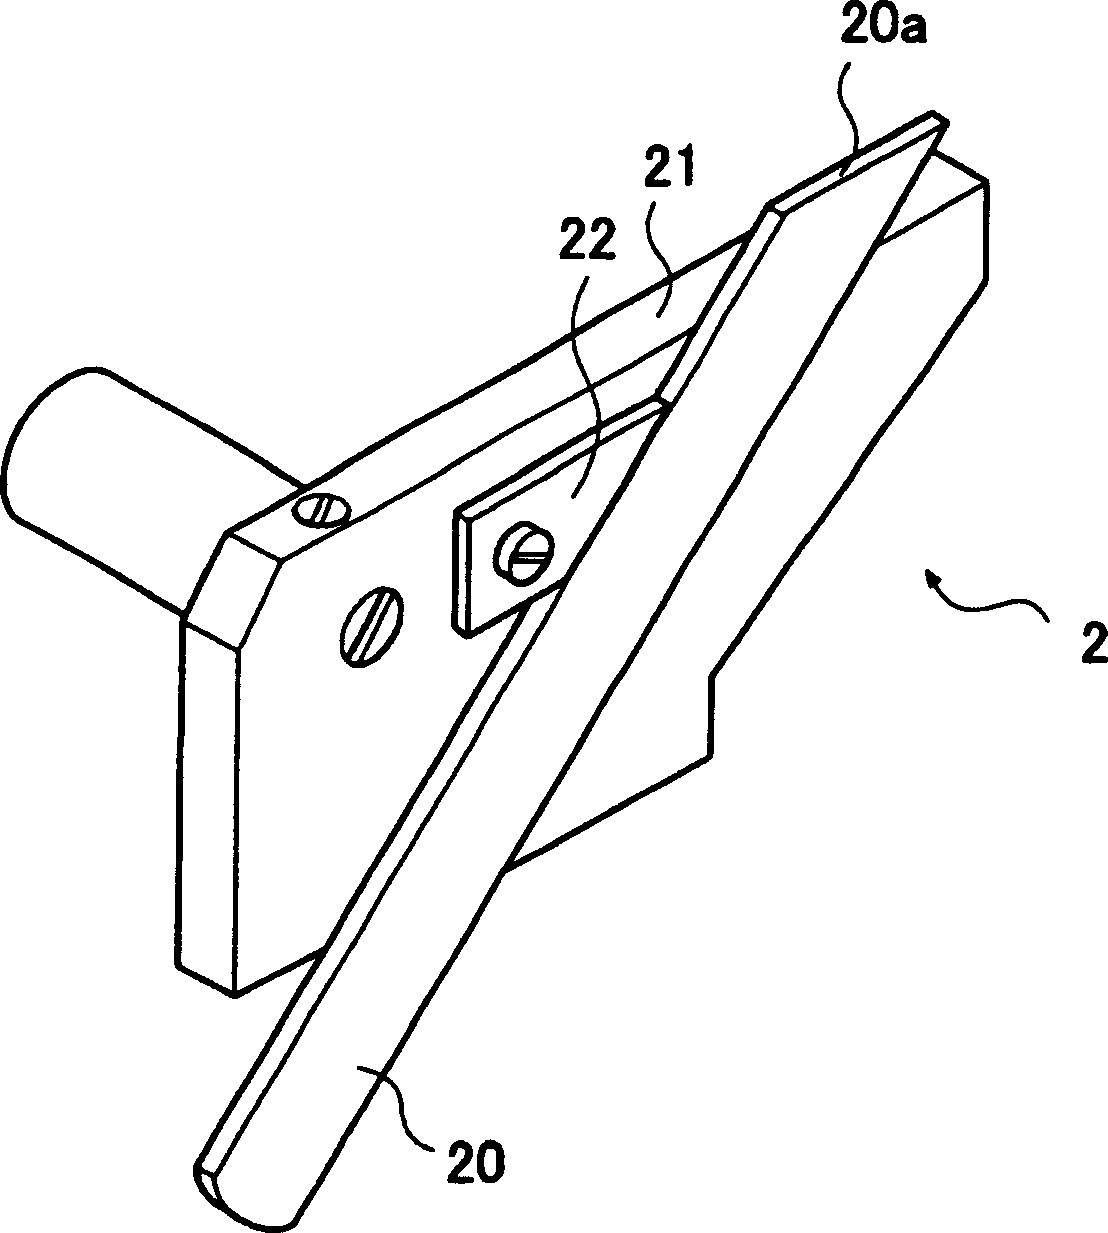 Cloth-cutting apparatus of sewing machine